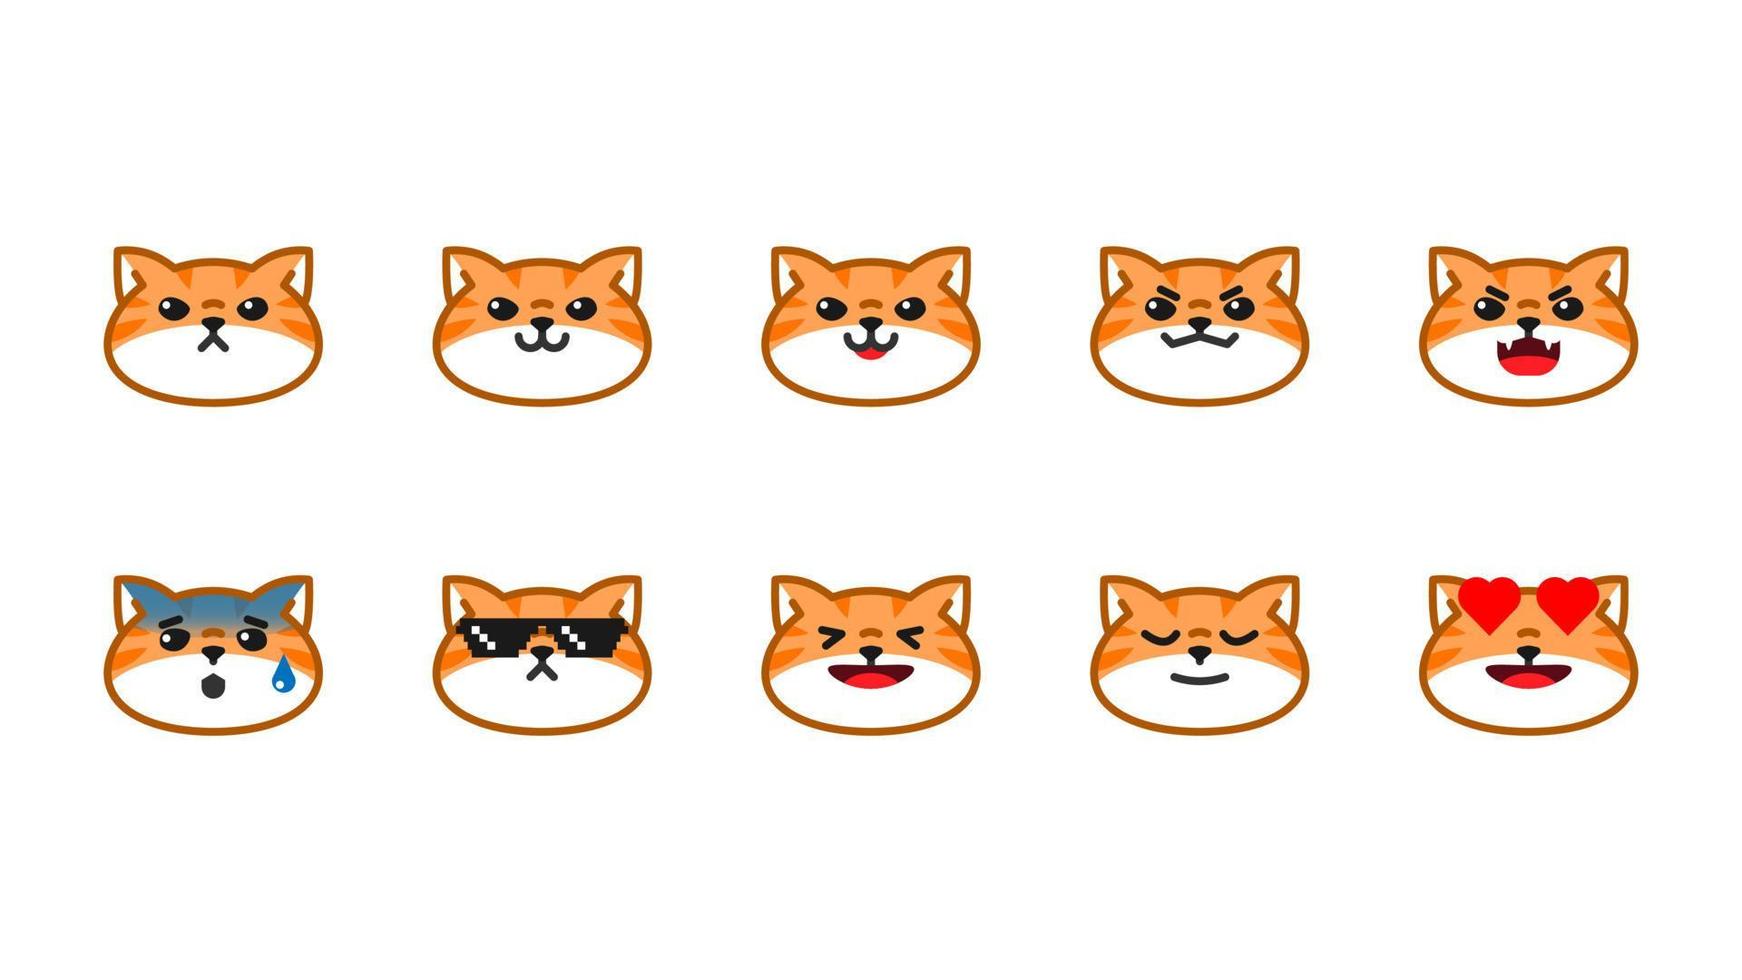 Cute orange cat emoji. Cat faces expression vector